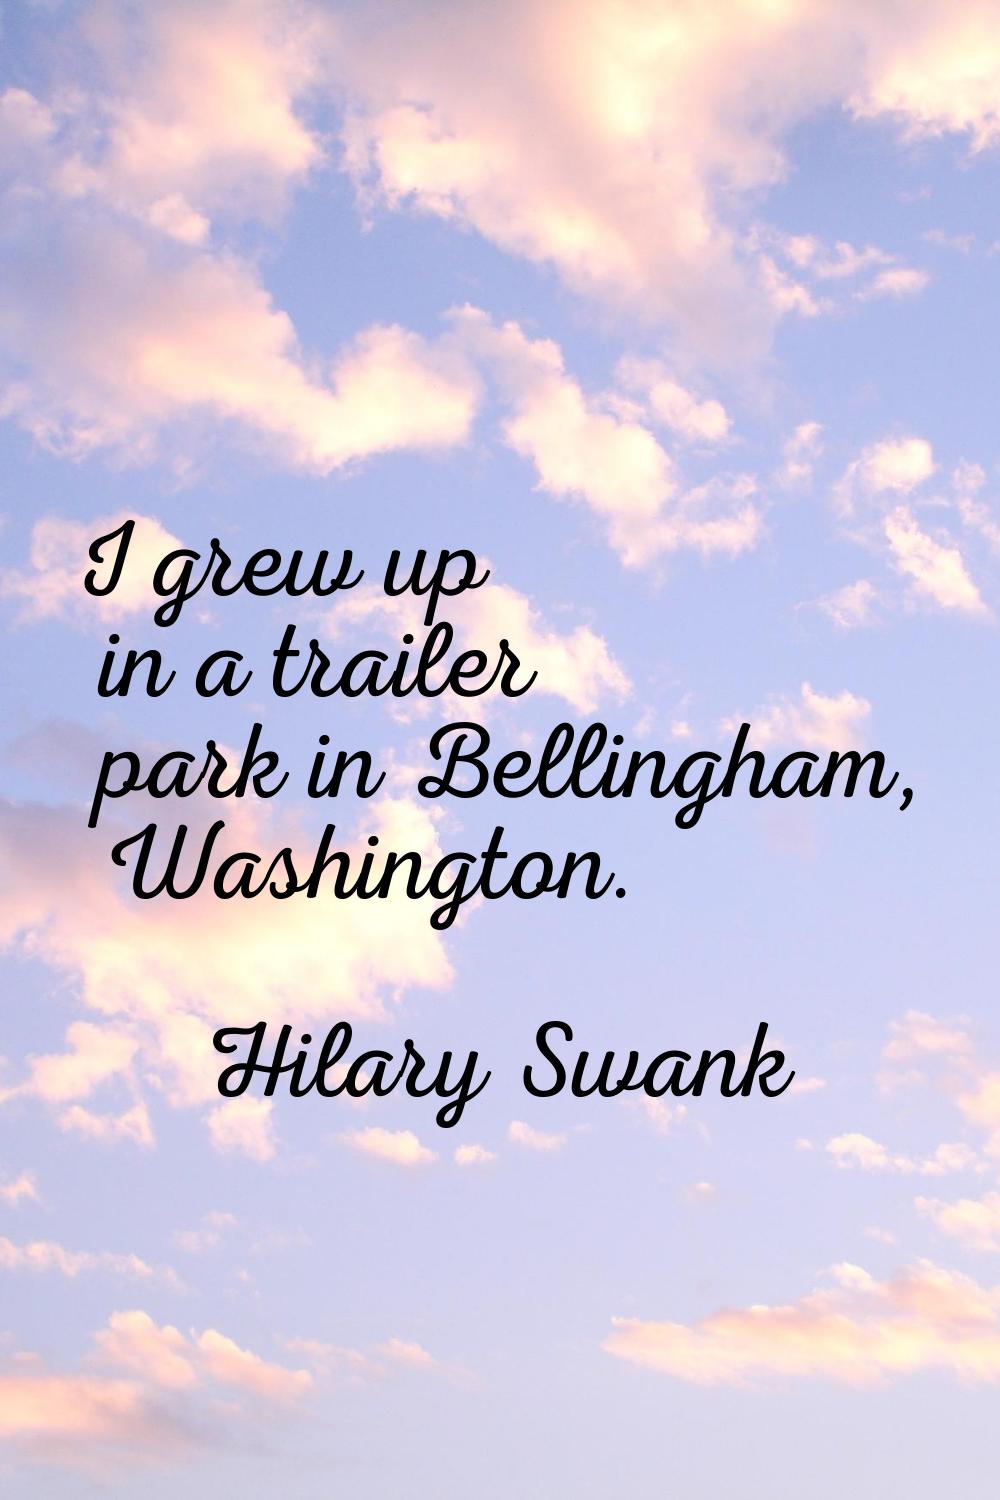 I grew up in a trailer park in Bellingham, Washington.